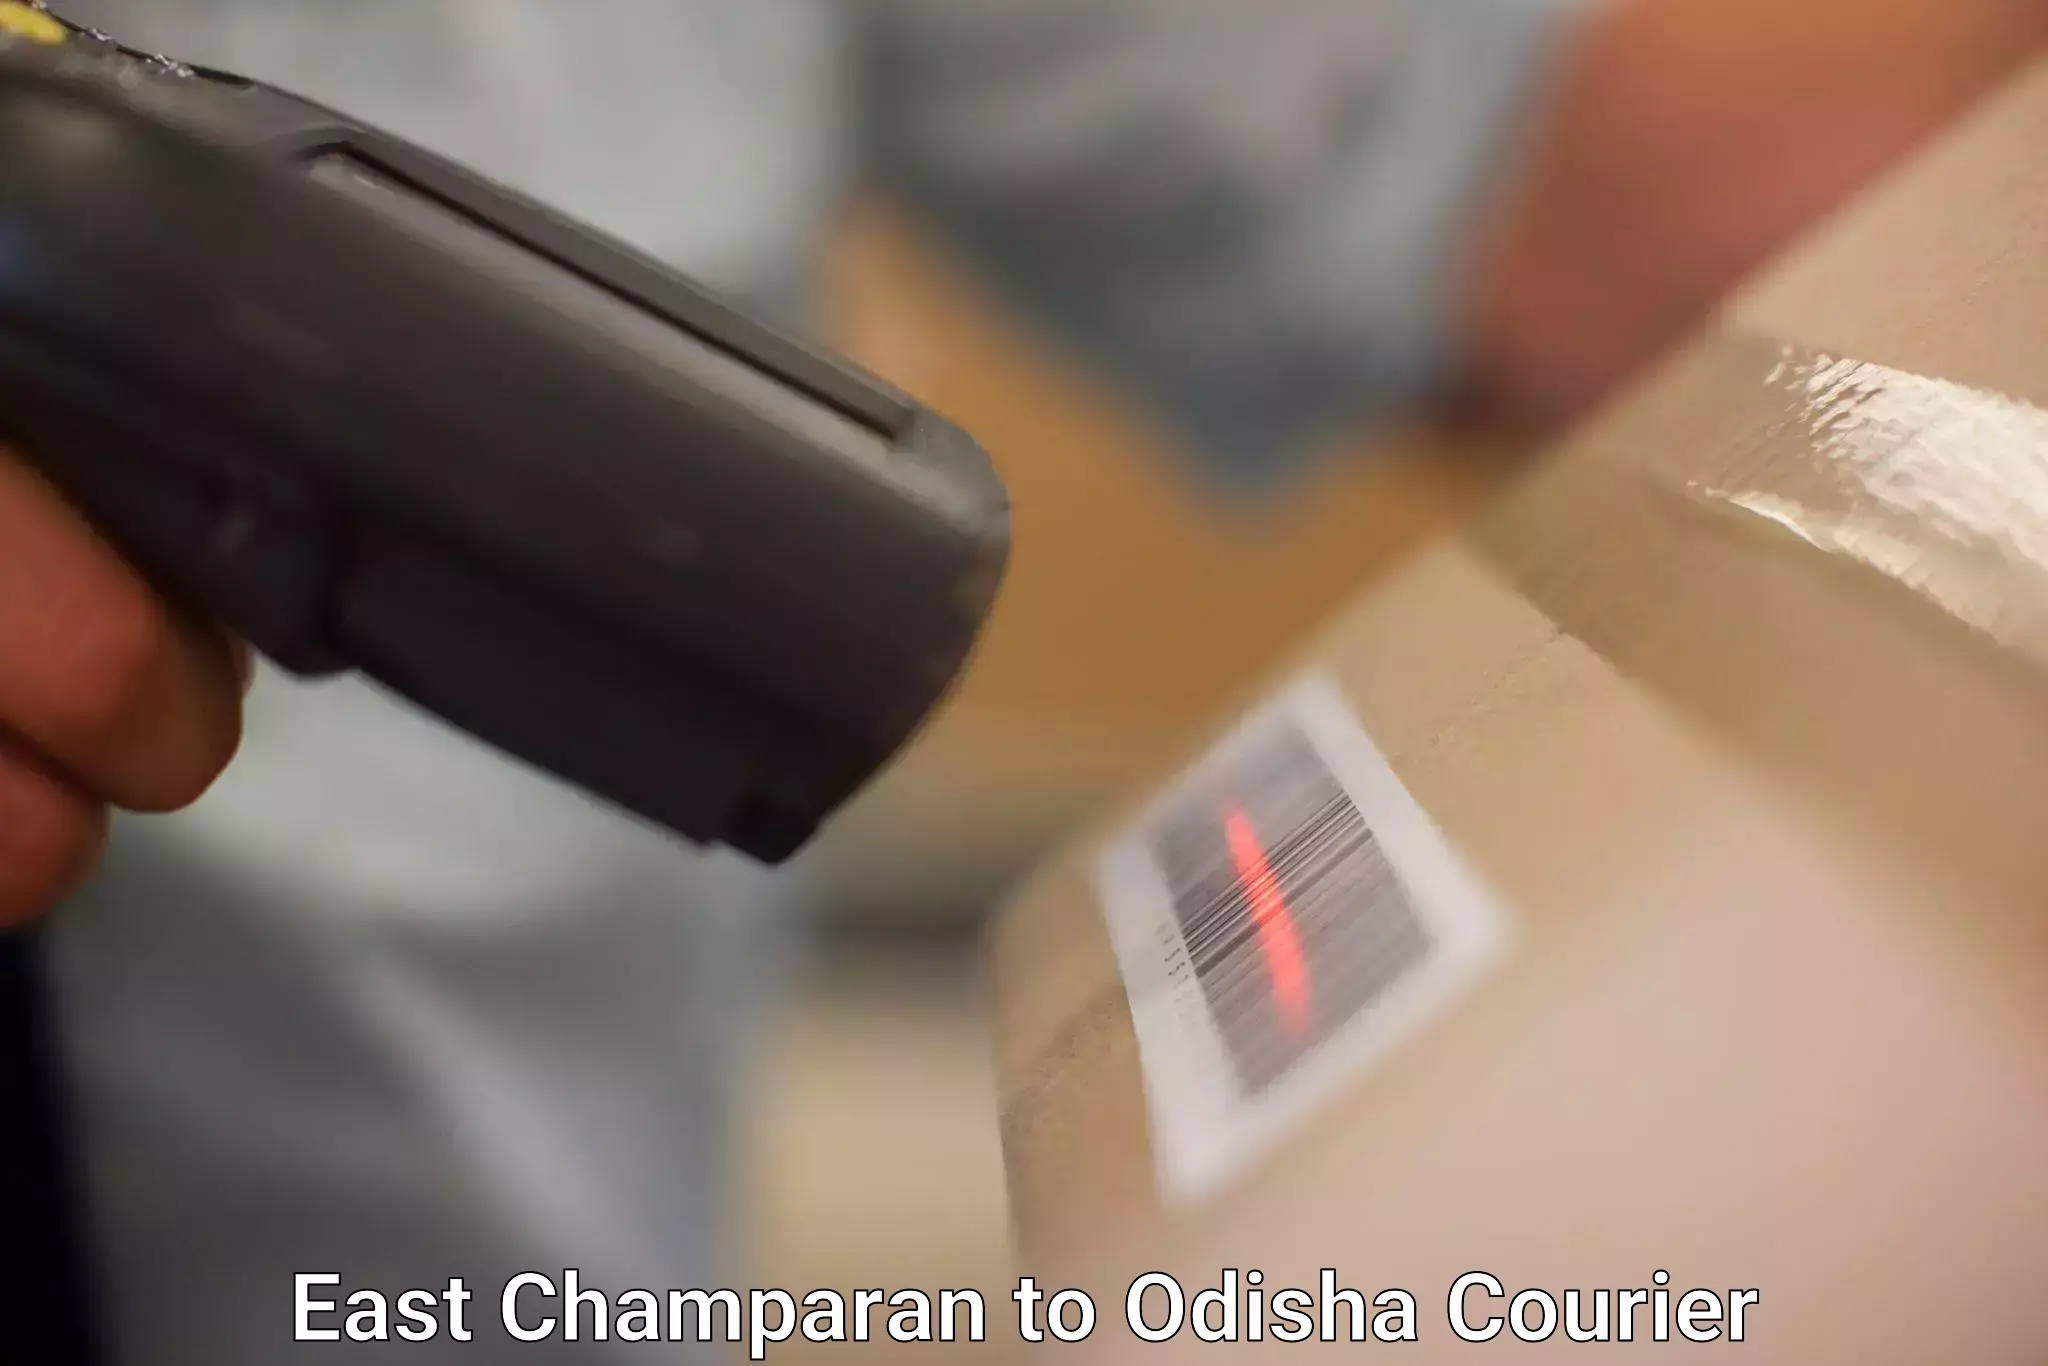 Courier service innovation East Champaran to Kalahandi